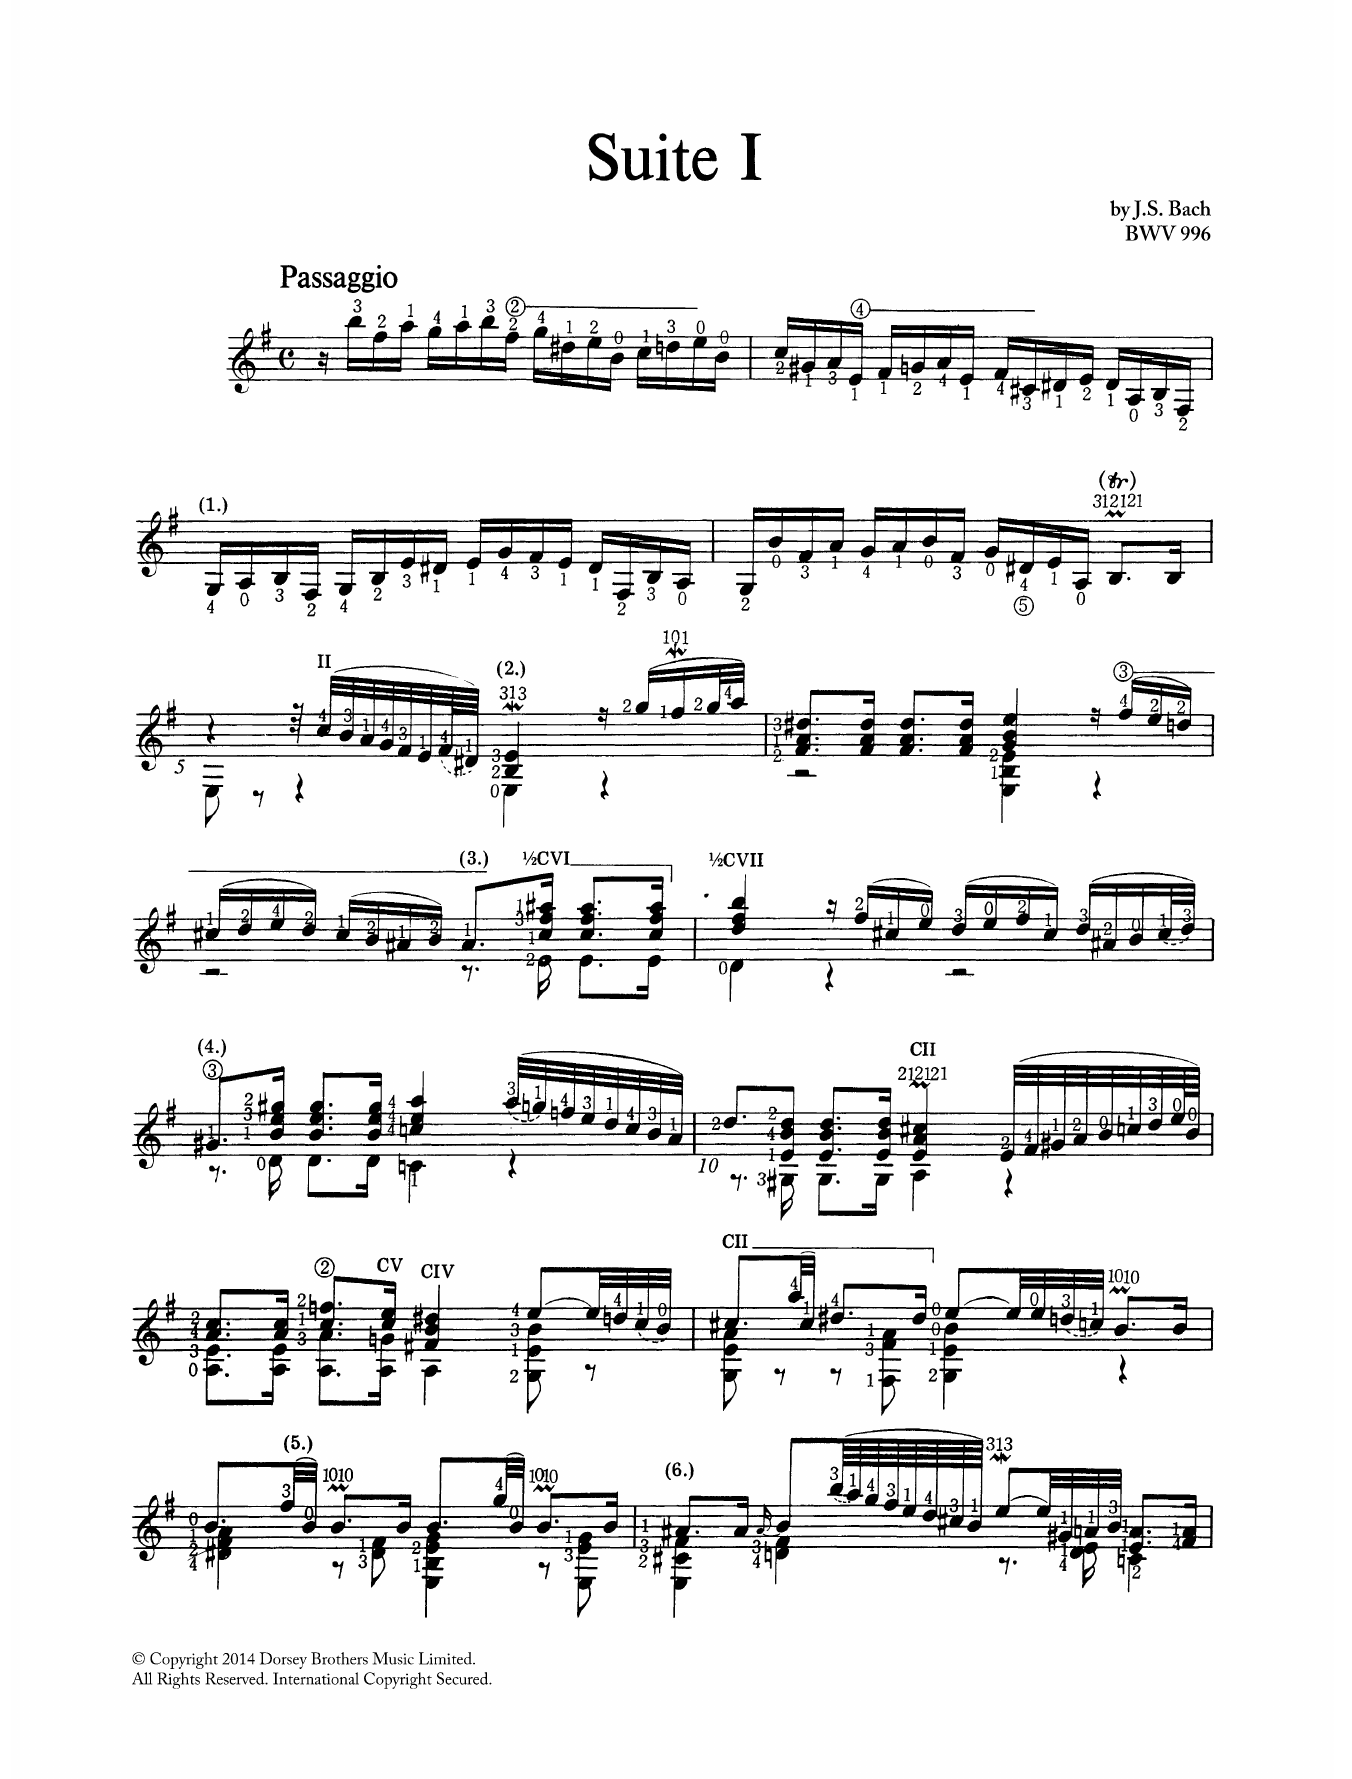 Johann Sebastian Bach Suite In E Minor BWV 996 Sheet Music Notes & Chords for Guitar - Download or Print PDF